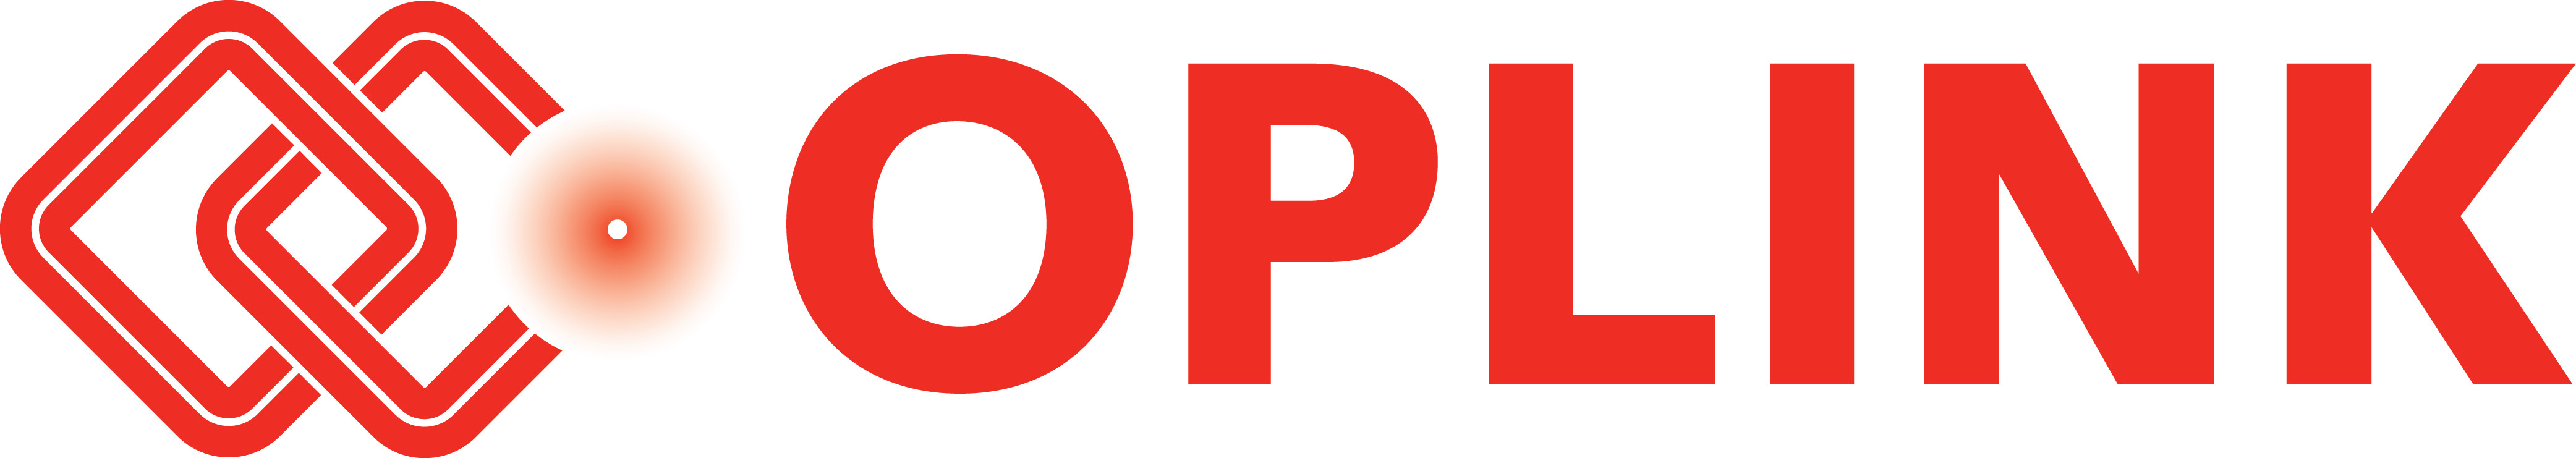 Oplink Communications Logo